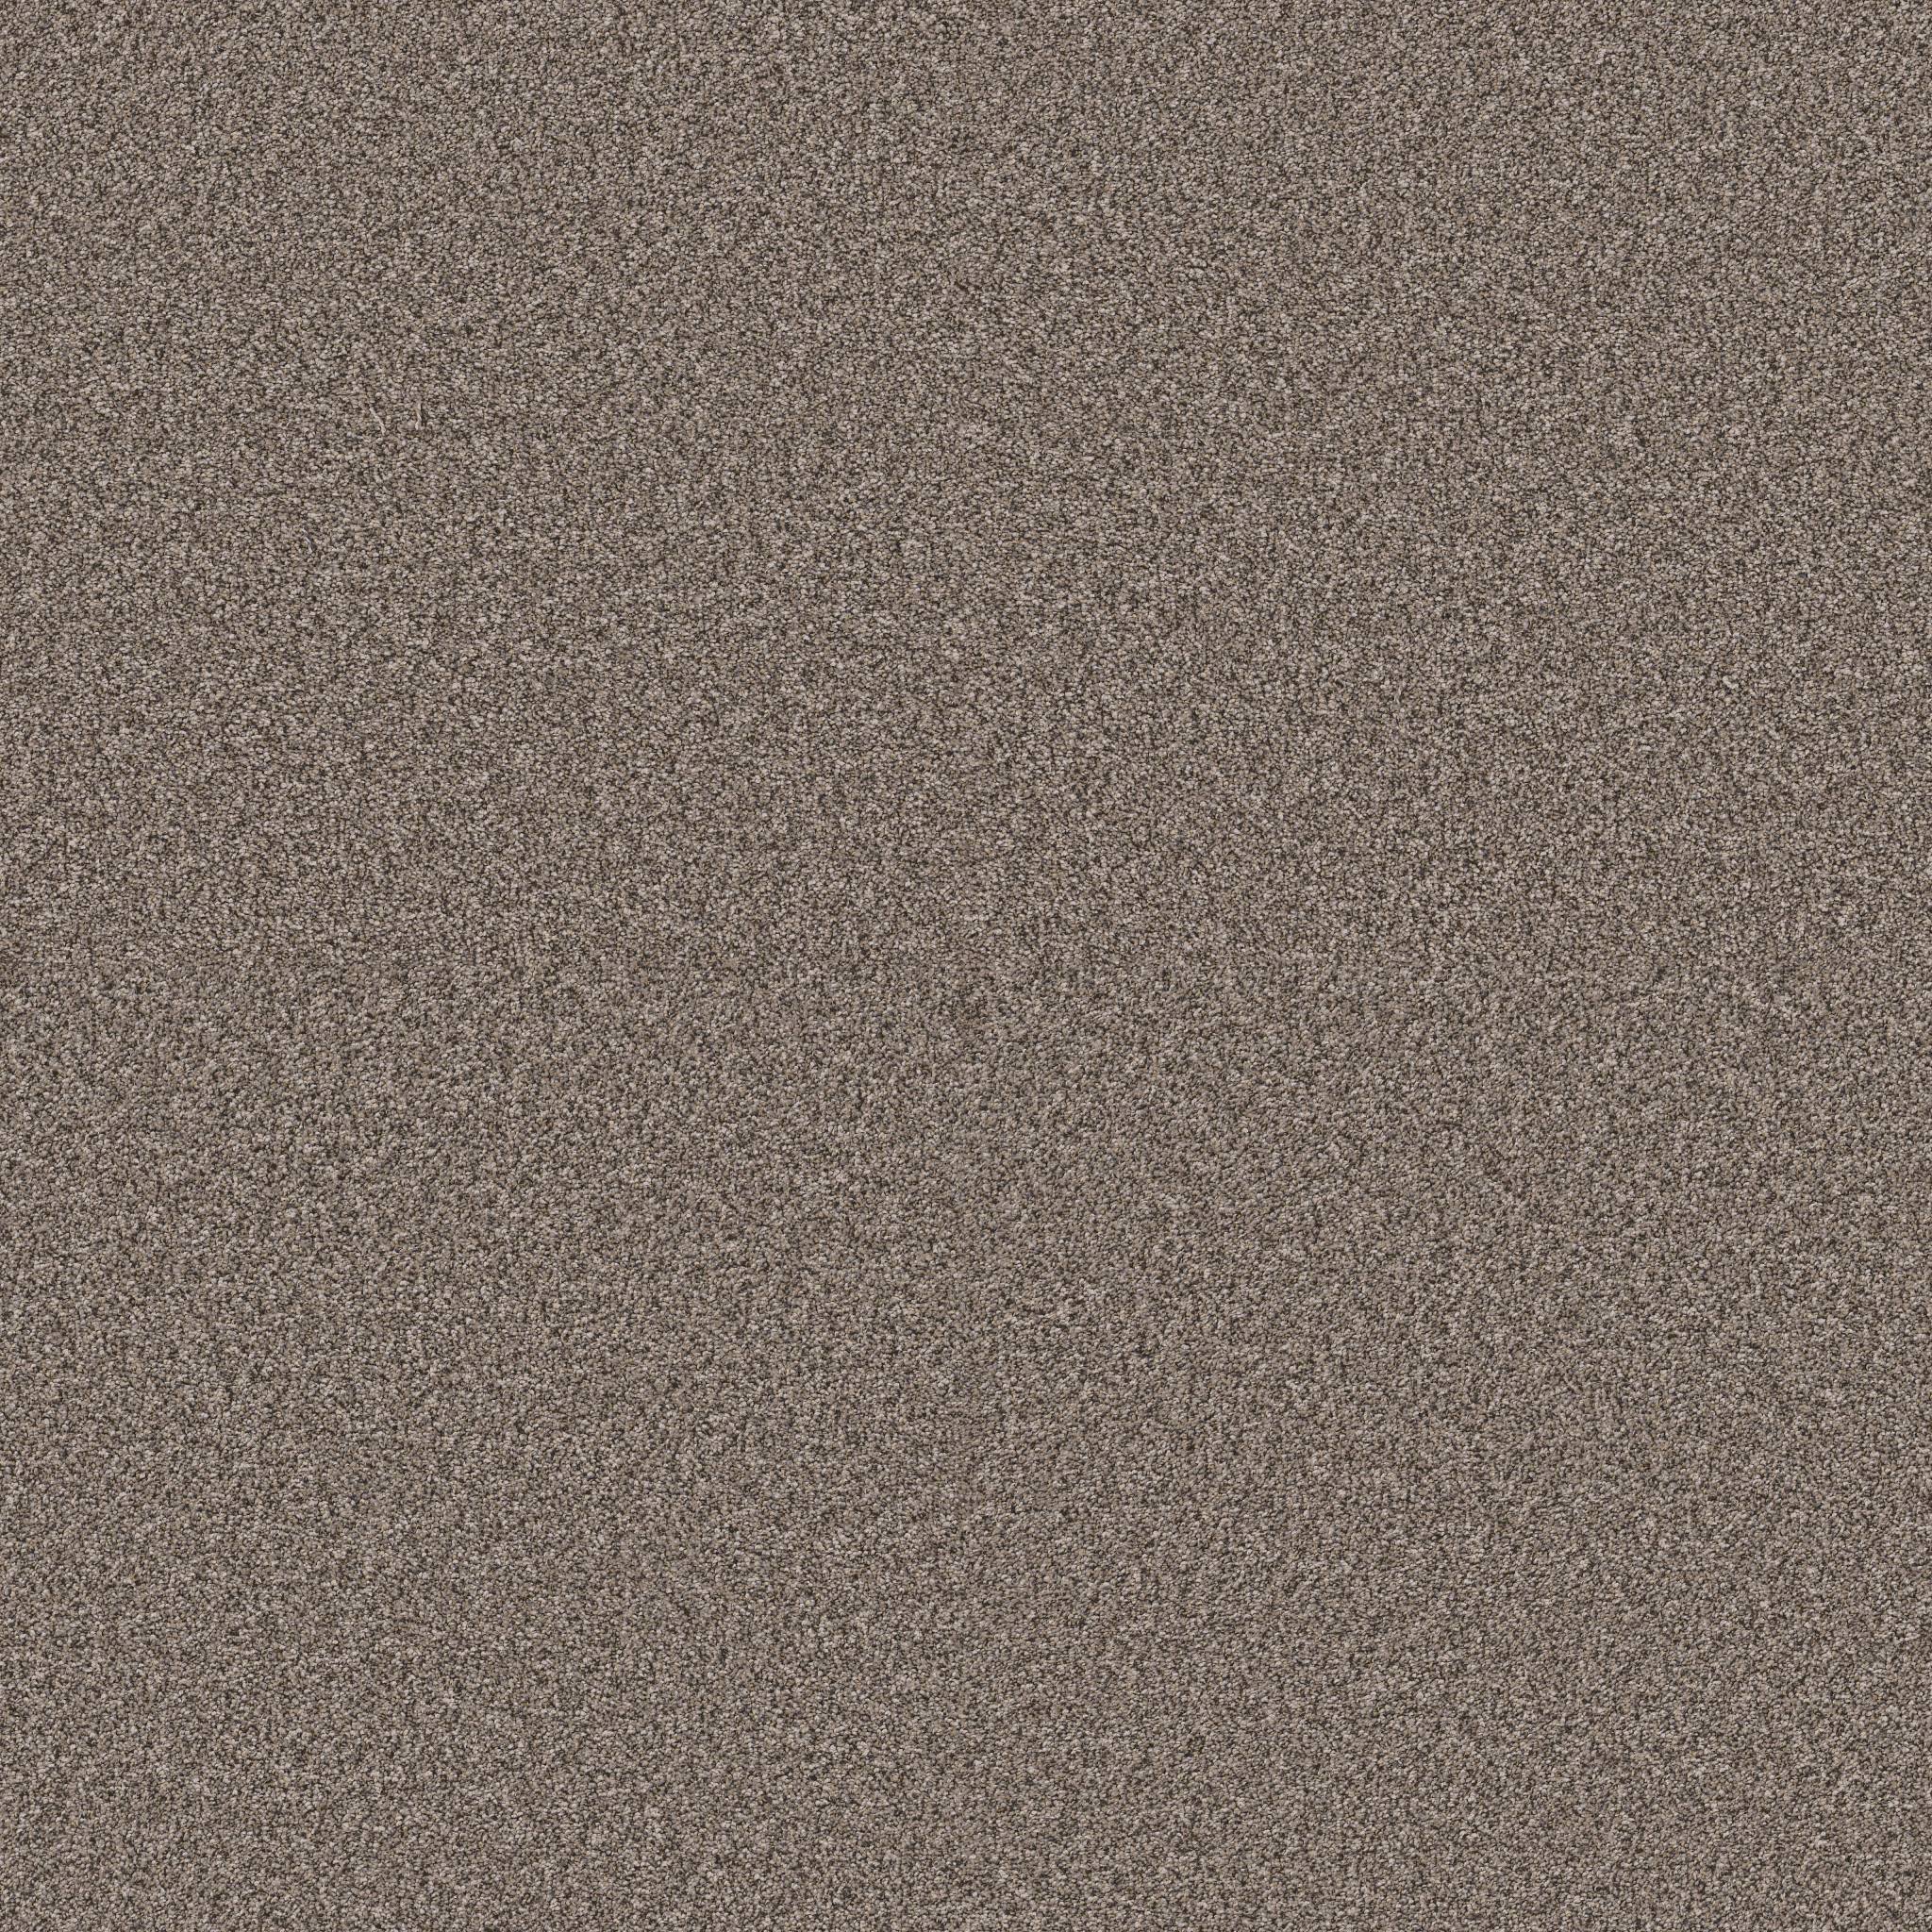 Kaleidoscope Carpet - Natural Stone Zoomed Swatch Image